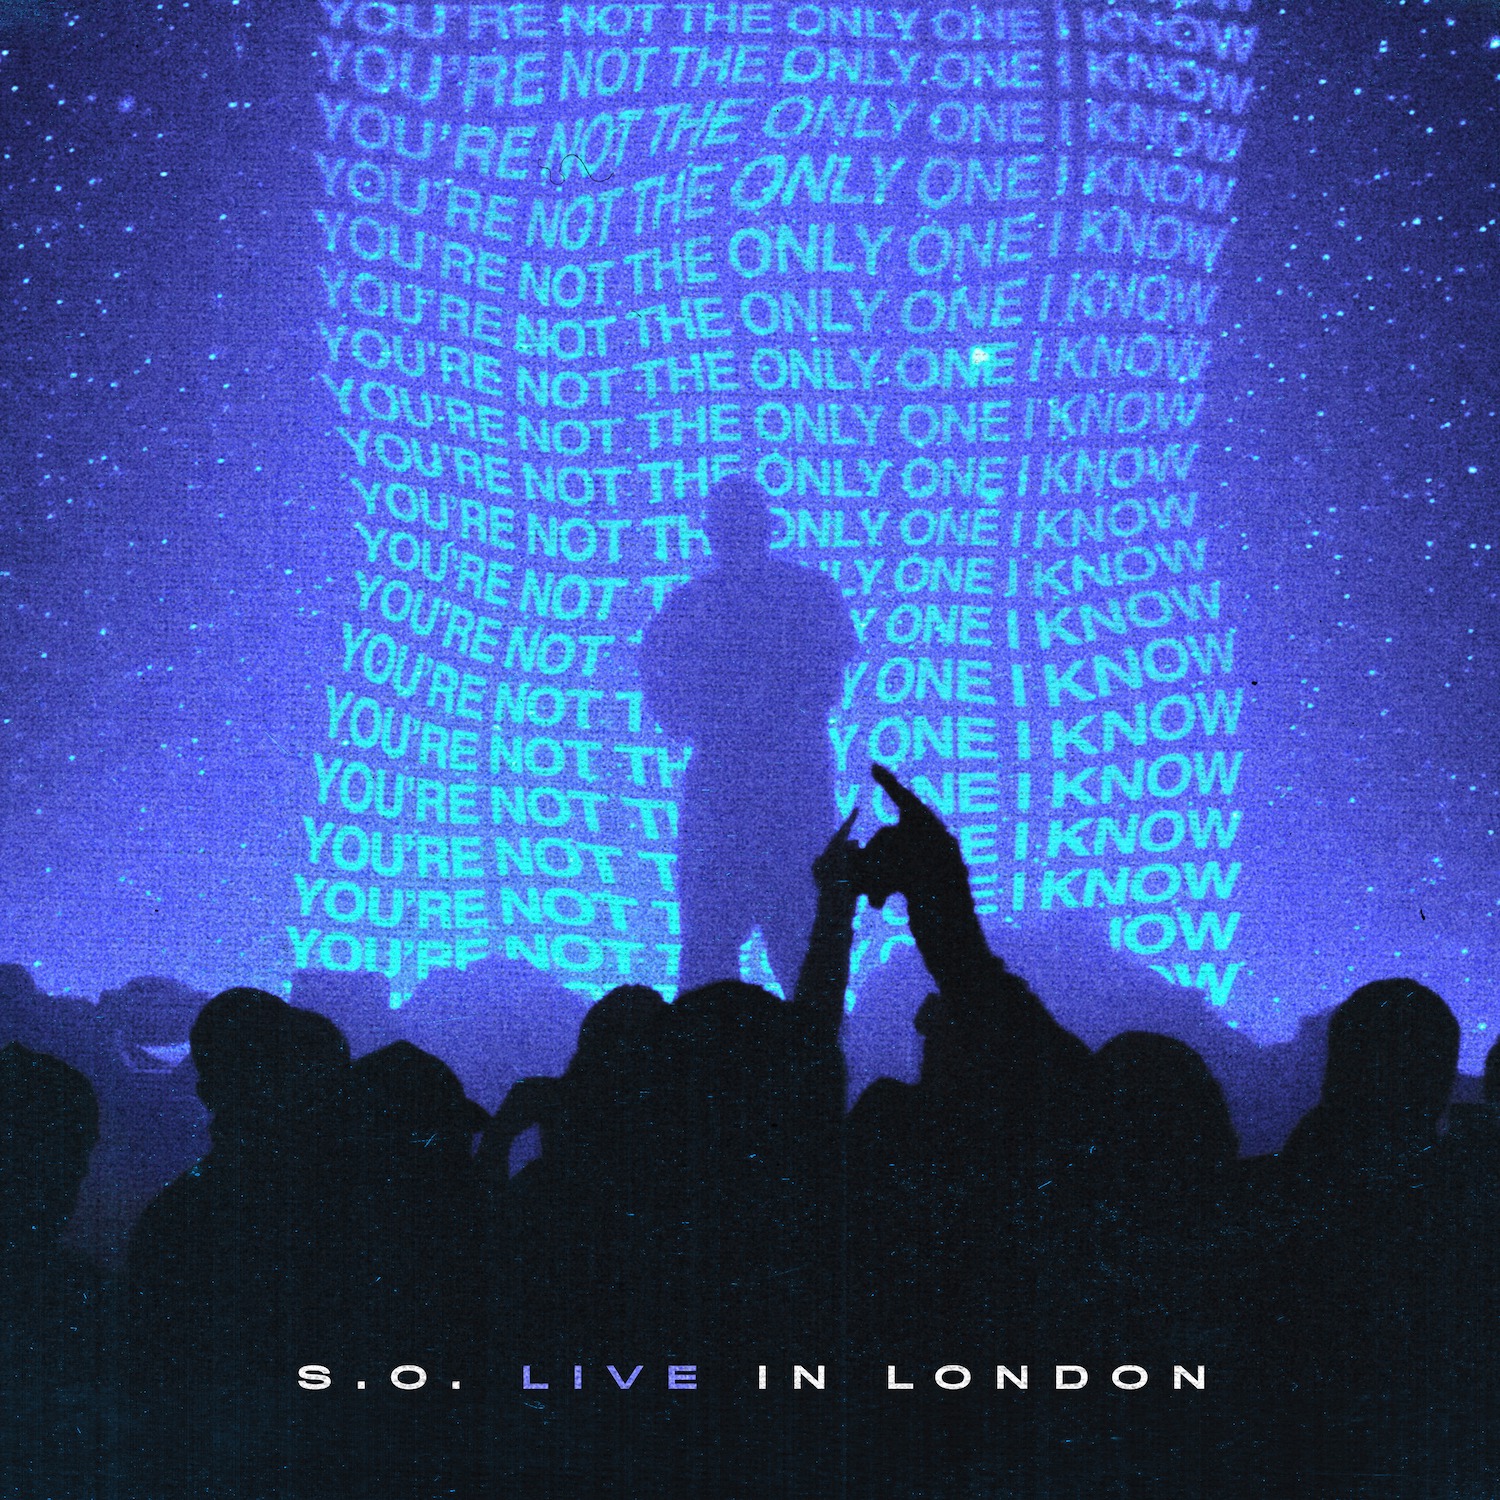 S.O. - Live in London